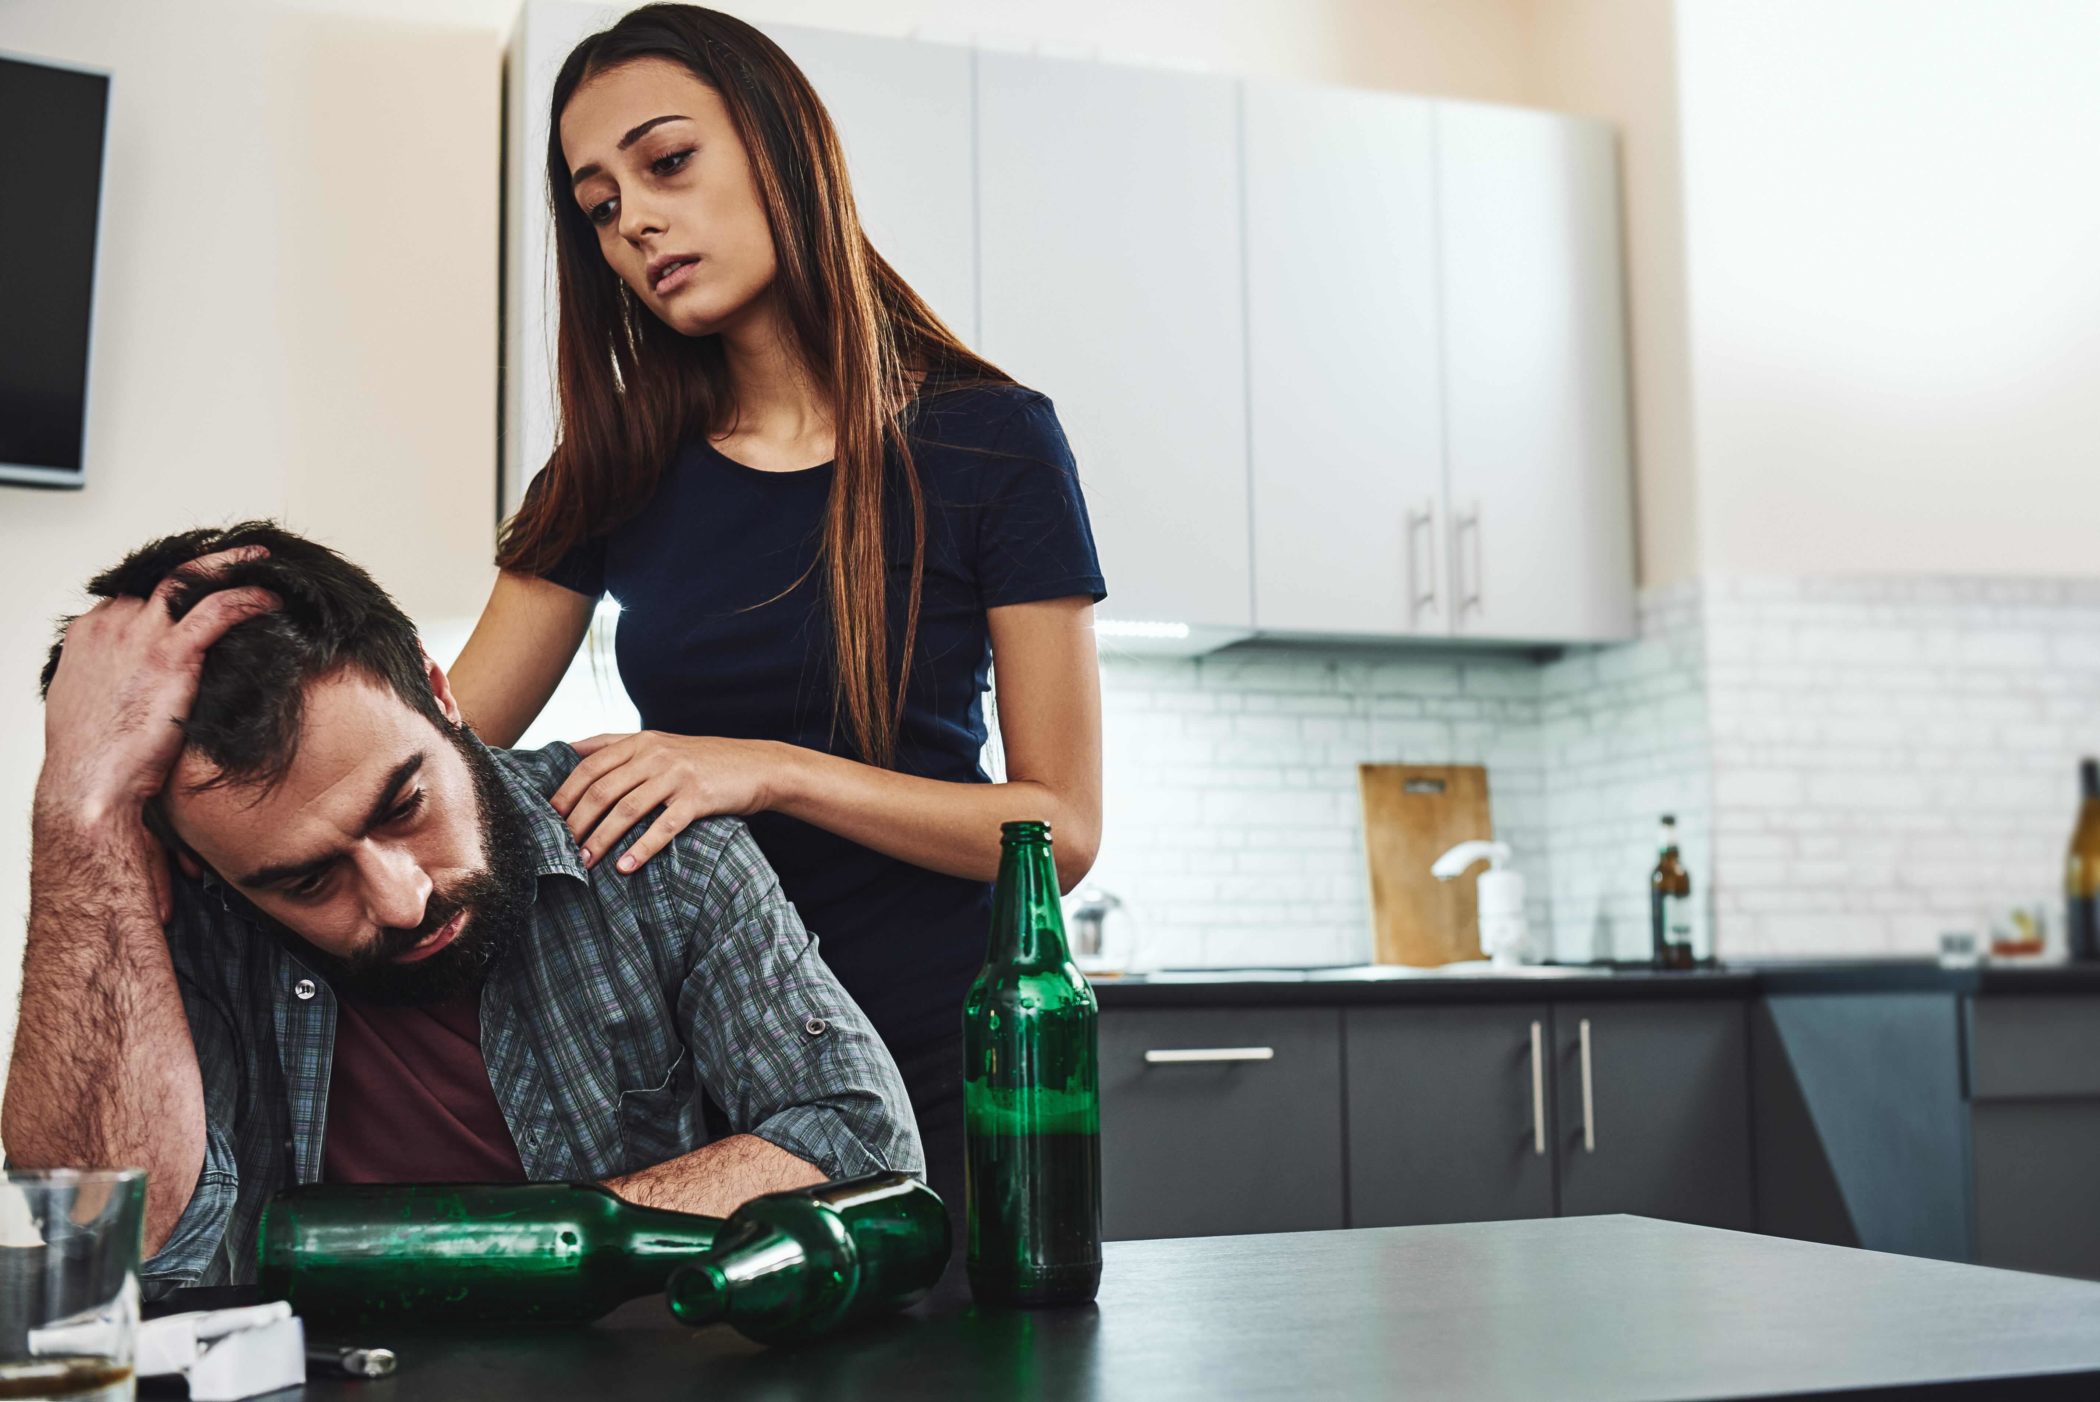 woman enabling husband’s addiction